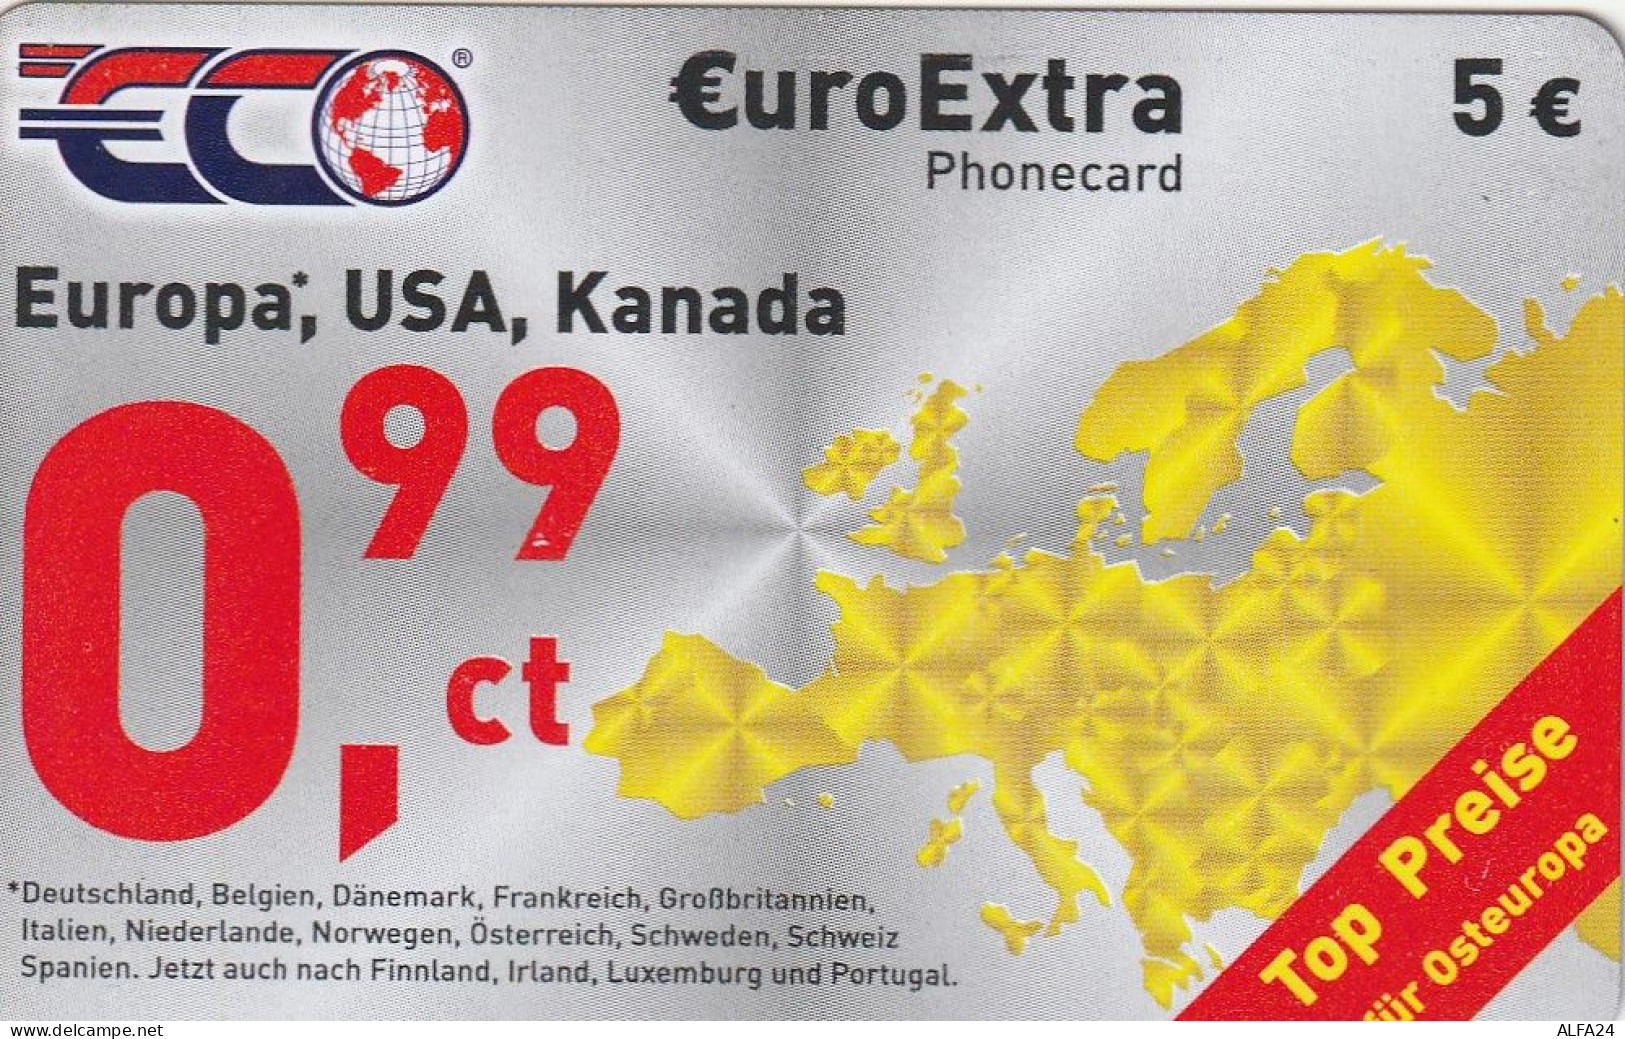 PREPAID PHONE CARD GERMANIA  (CV4699 - GSM, Cartes Prepayées & Recharges